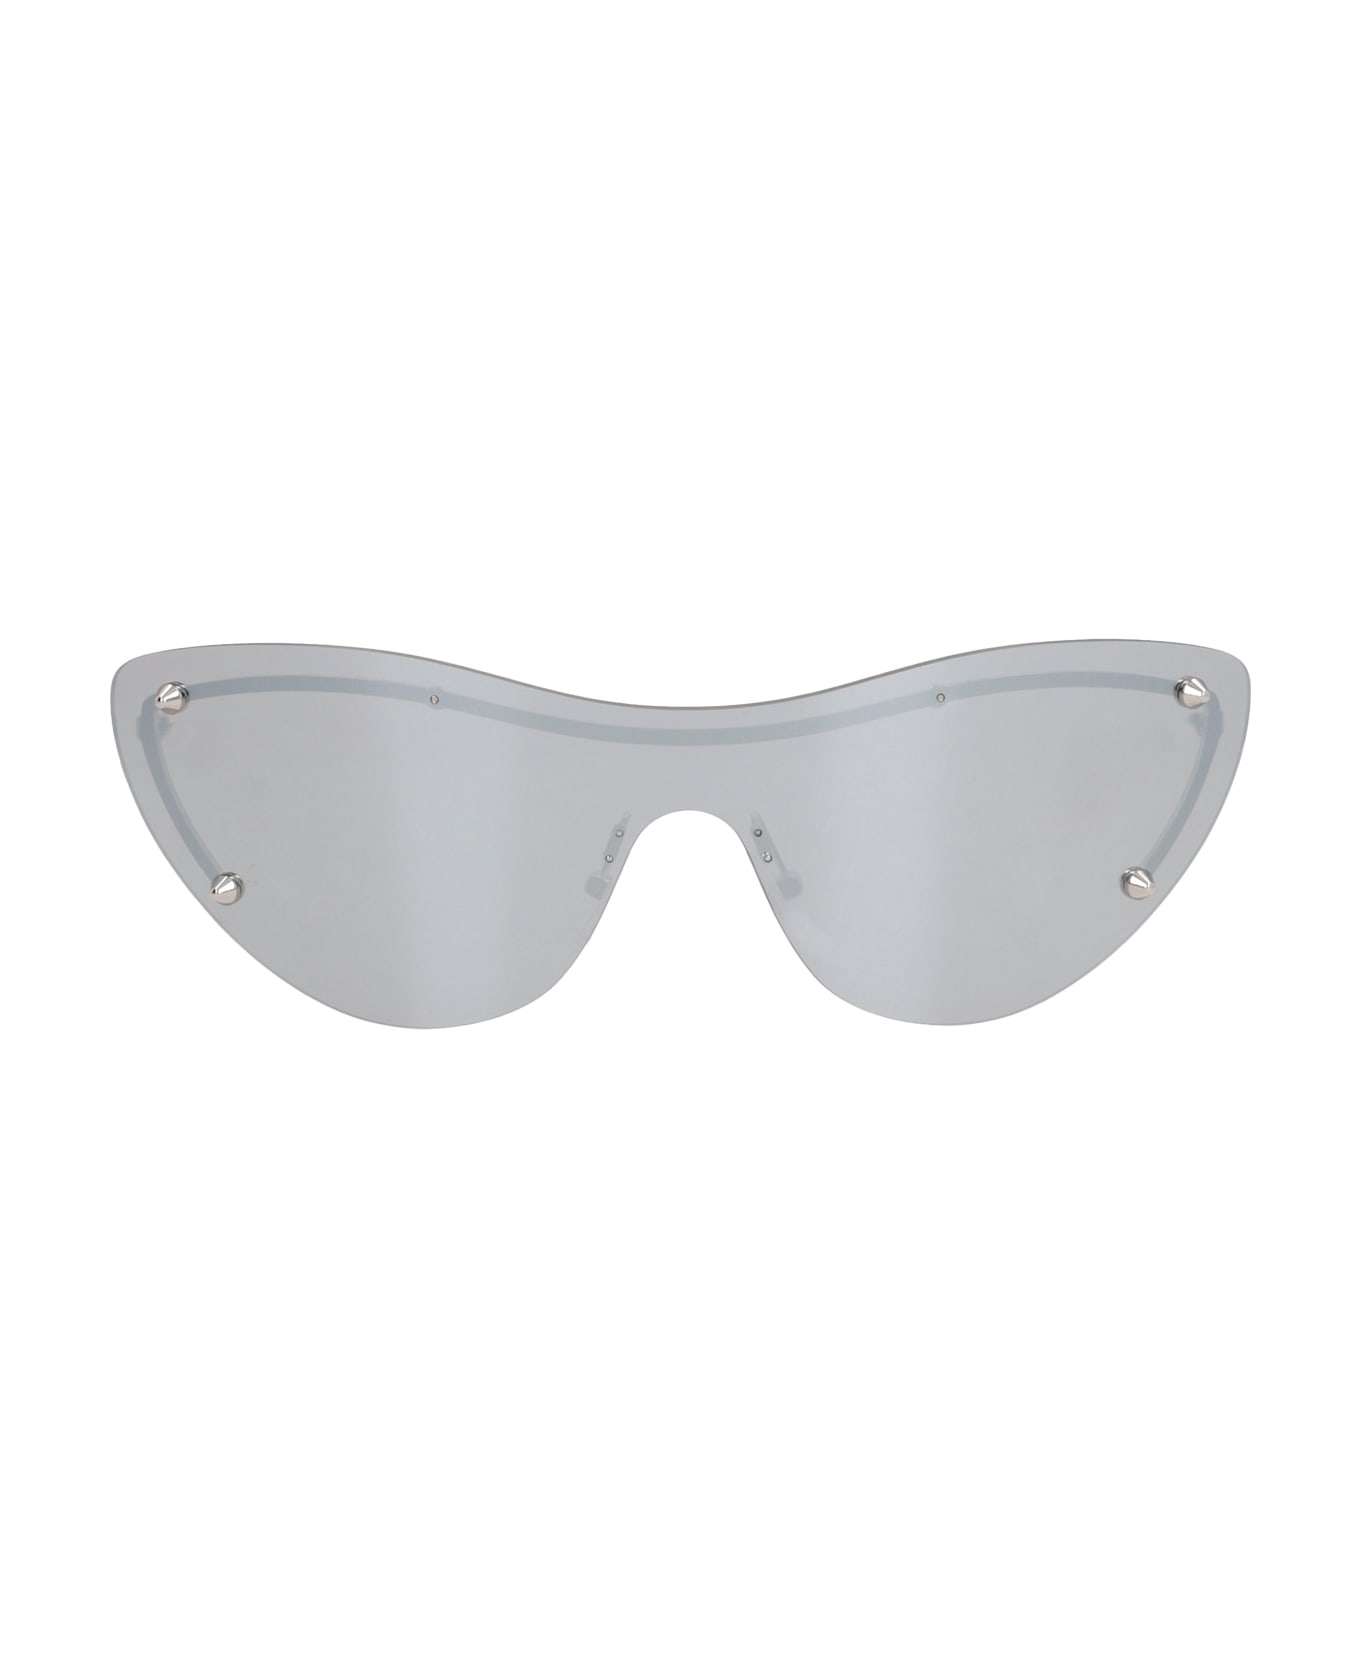 Alexander McQueen Eyewear Spike Studs Cat-eye Mask Sunglasses - Argento サングラス